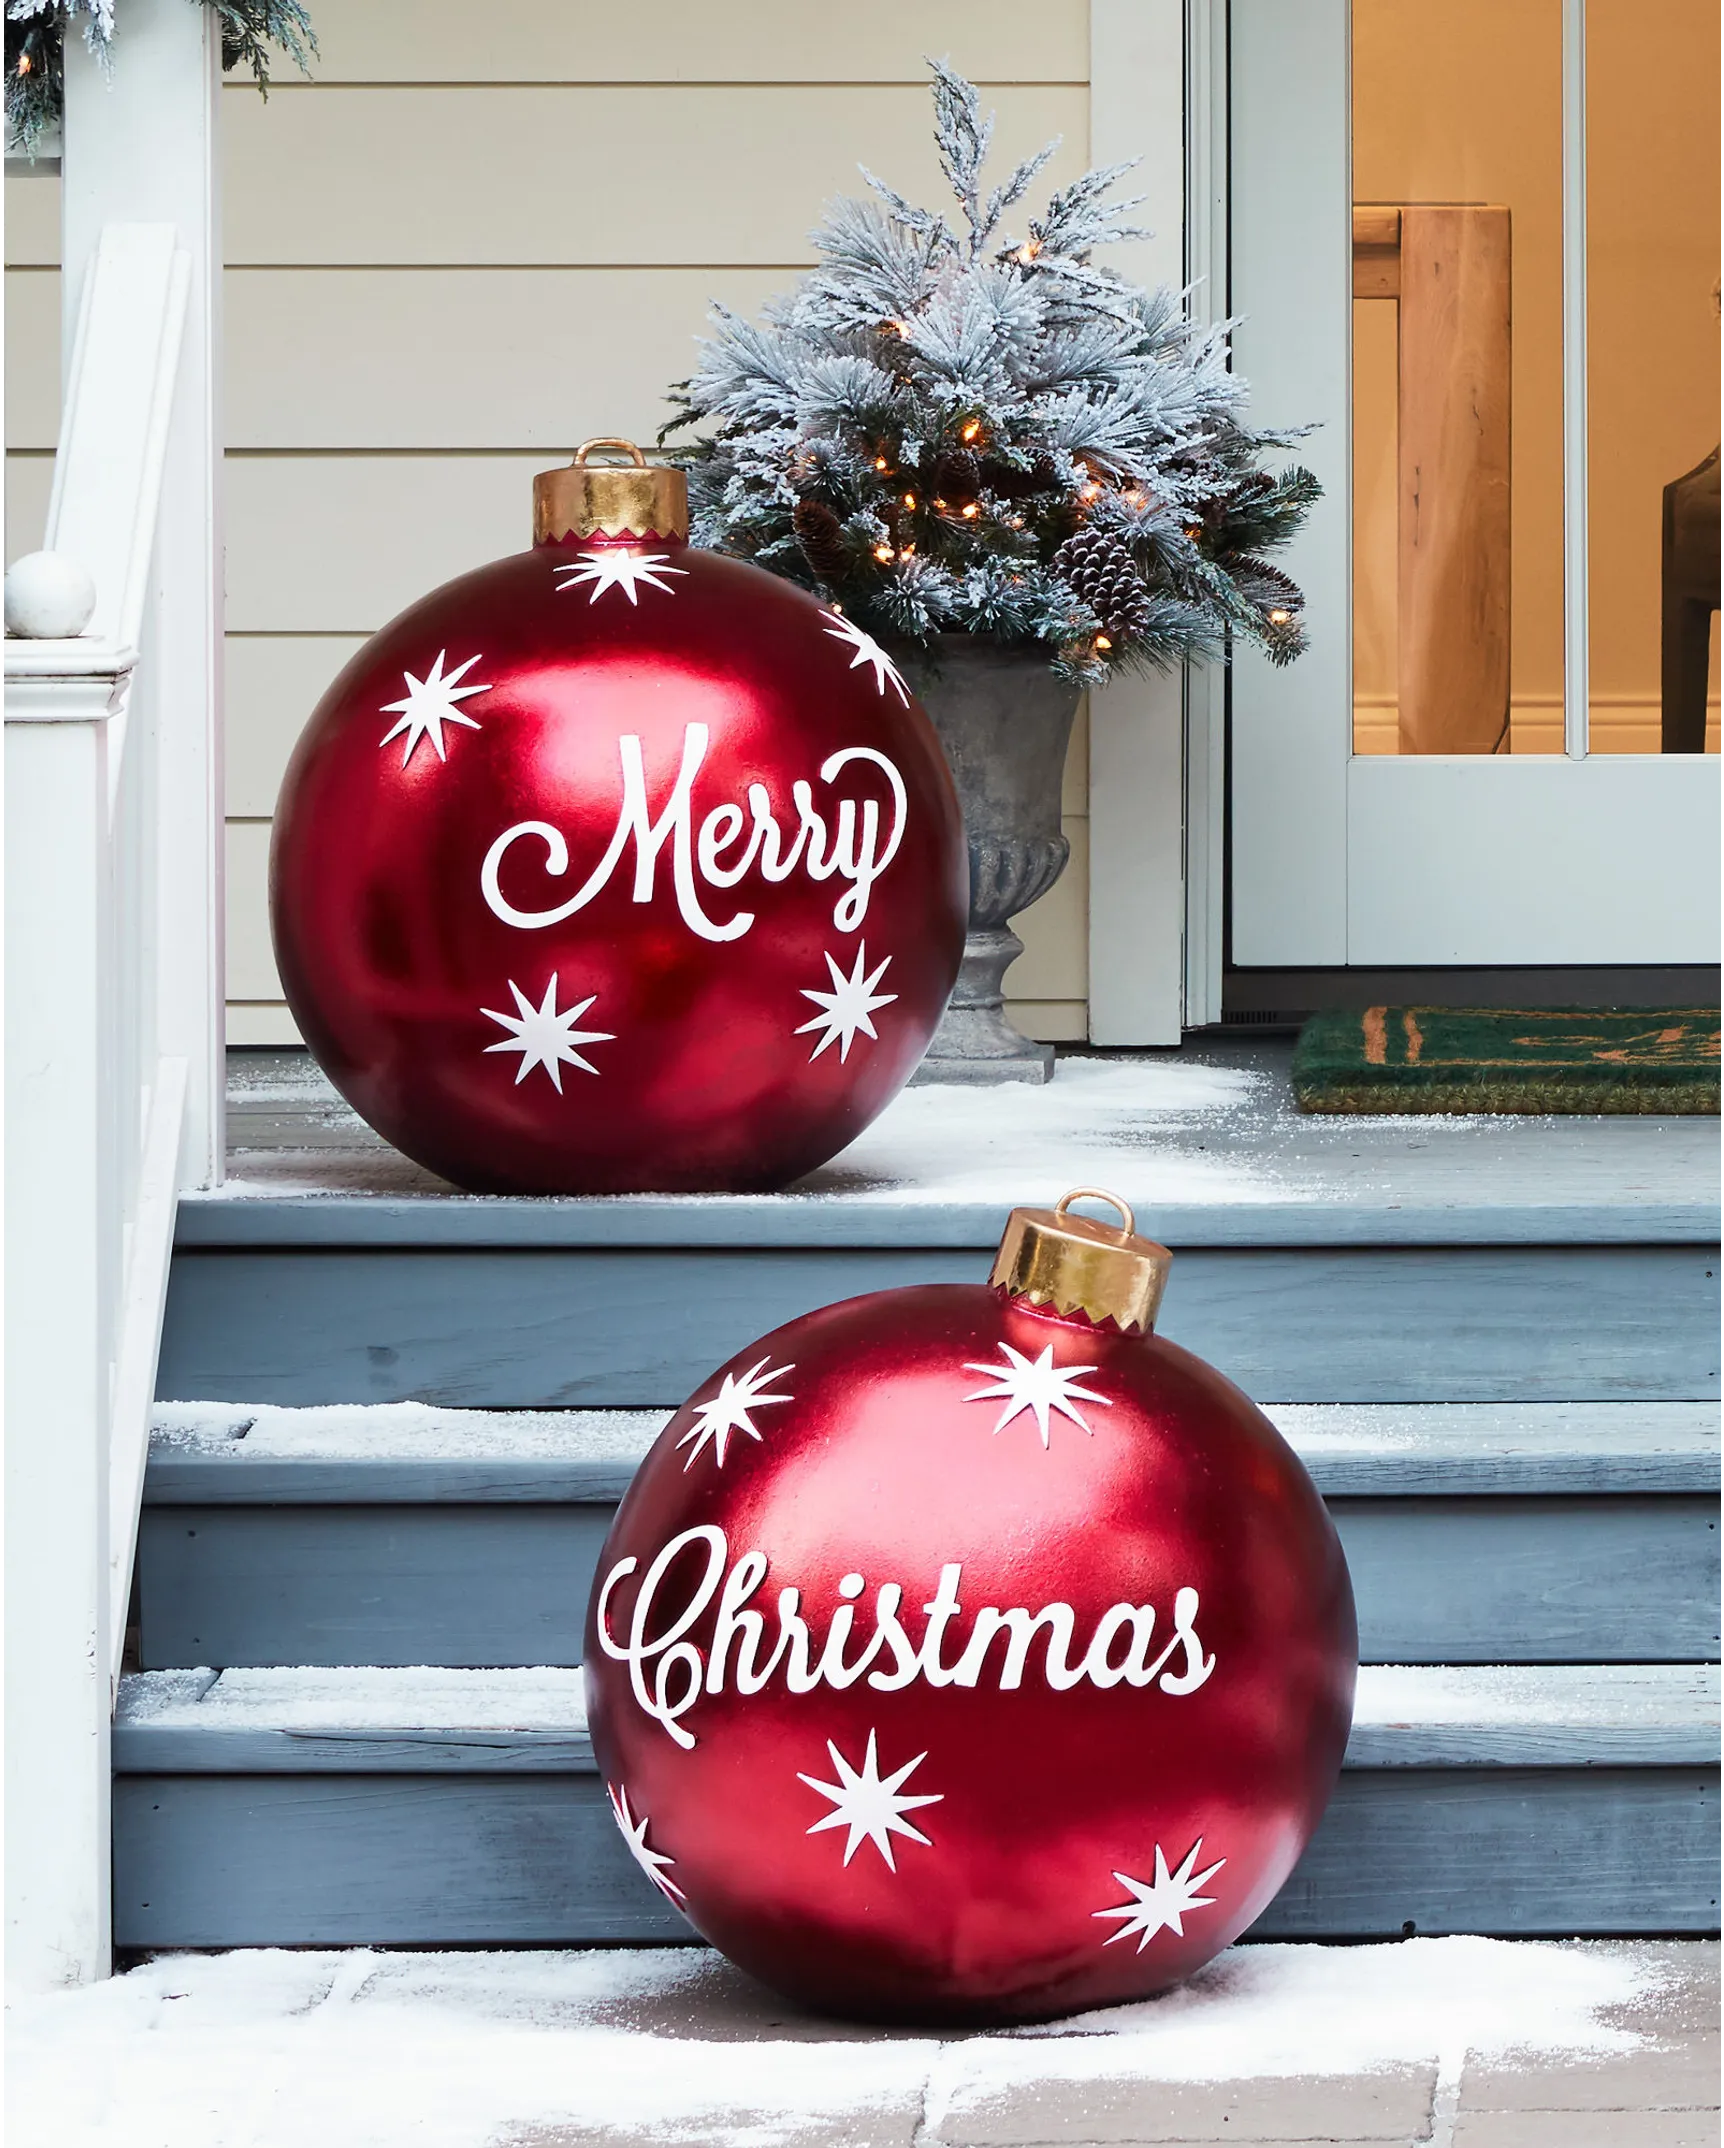 Shop Christmas Ornament Organizer online